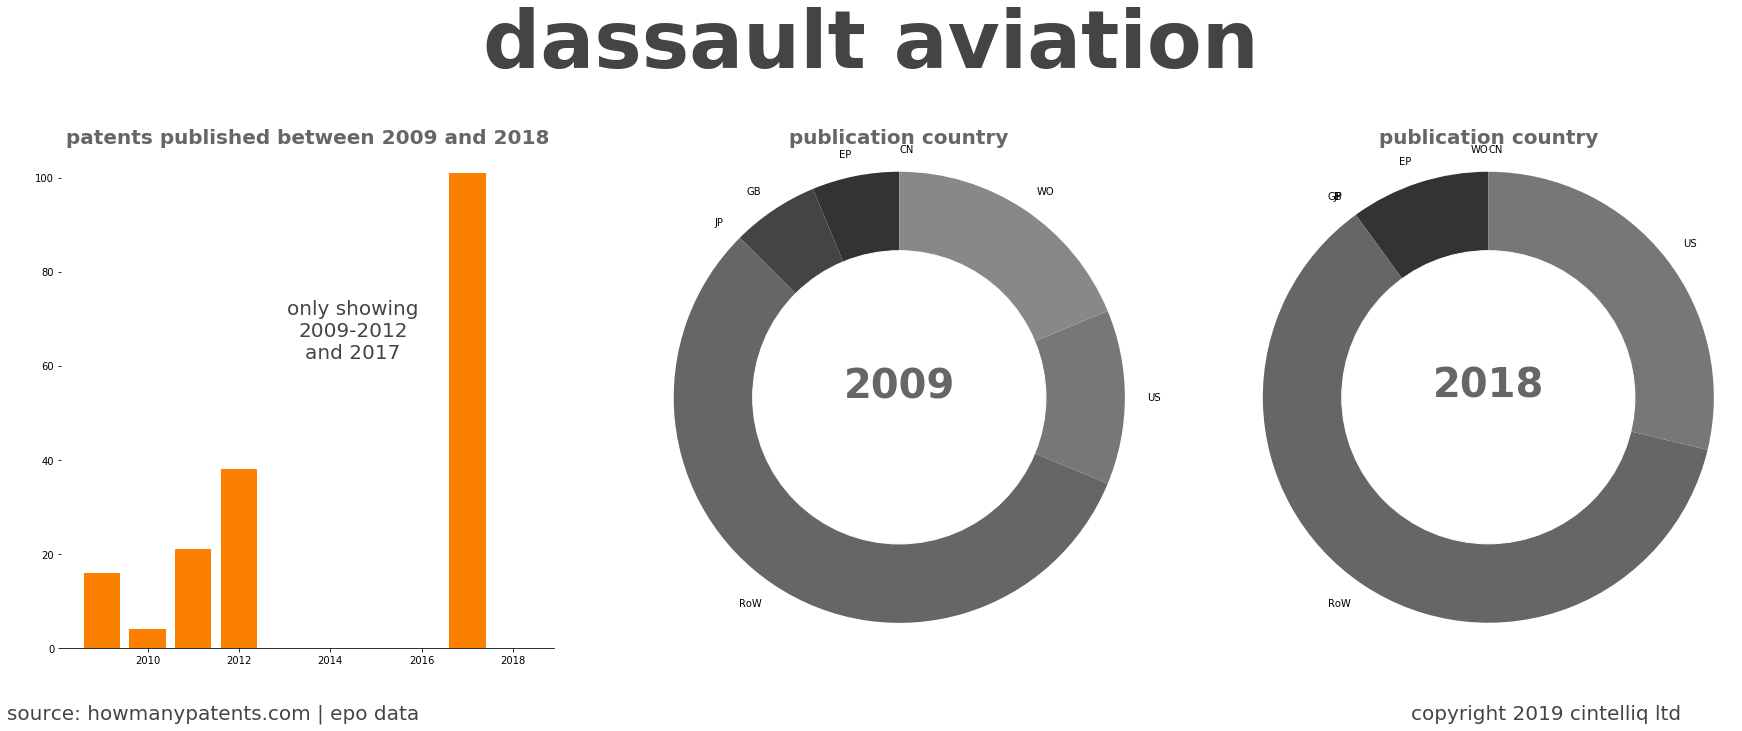 summary of patents for Dassault Aviation